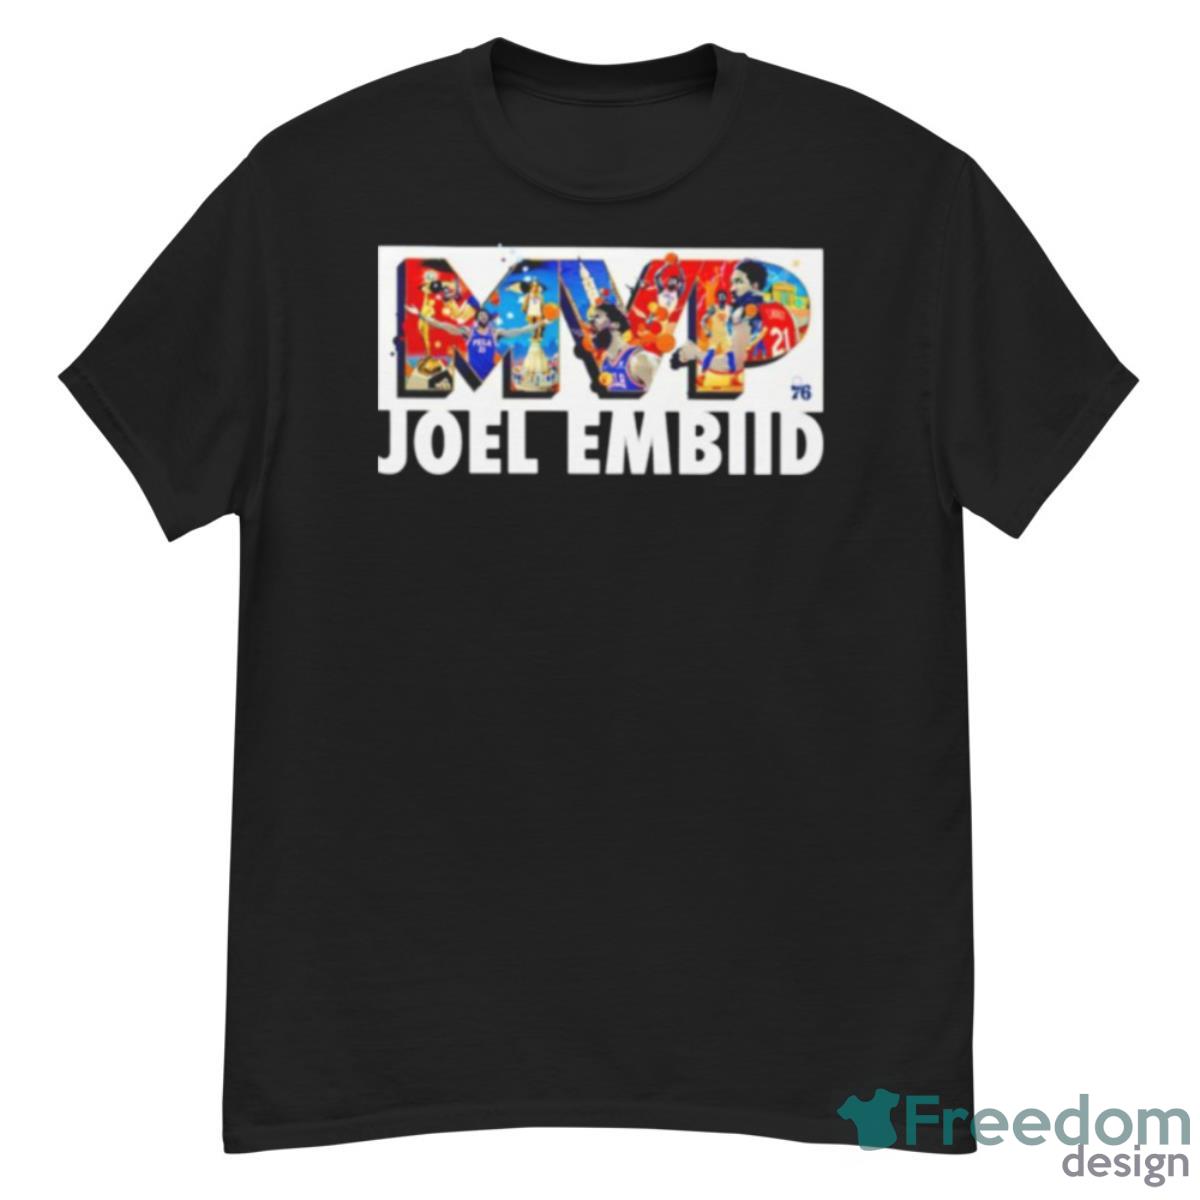 SALE!!! Joel Embiid Philadelphia 76ers Player Name & Number T shirt  S-5XL